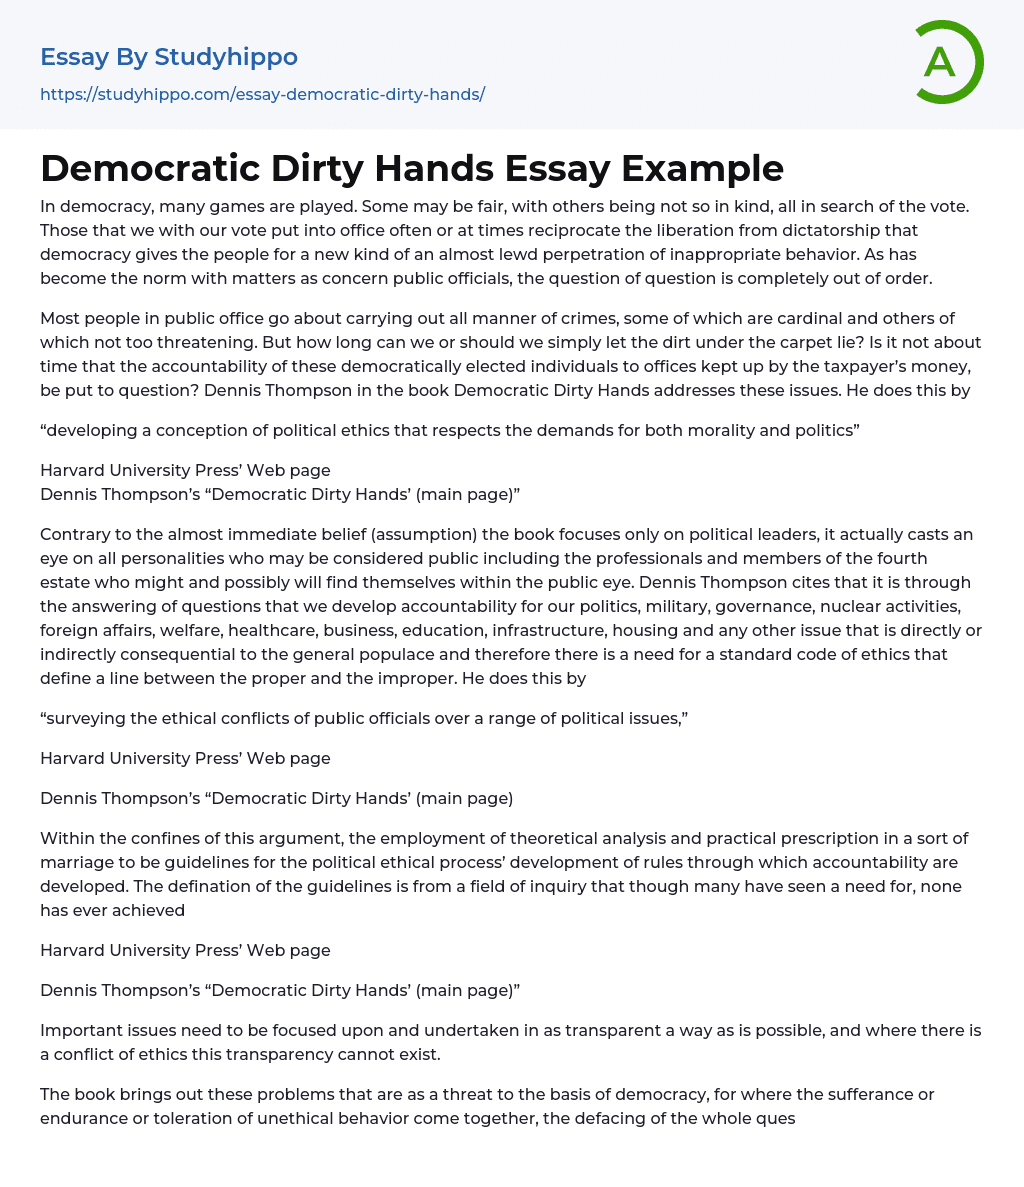 Democratic Dirty Hands Essay Example